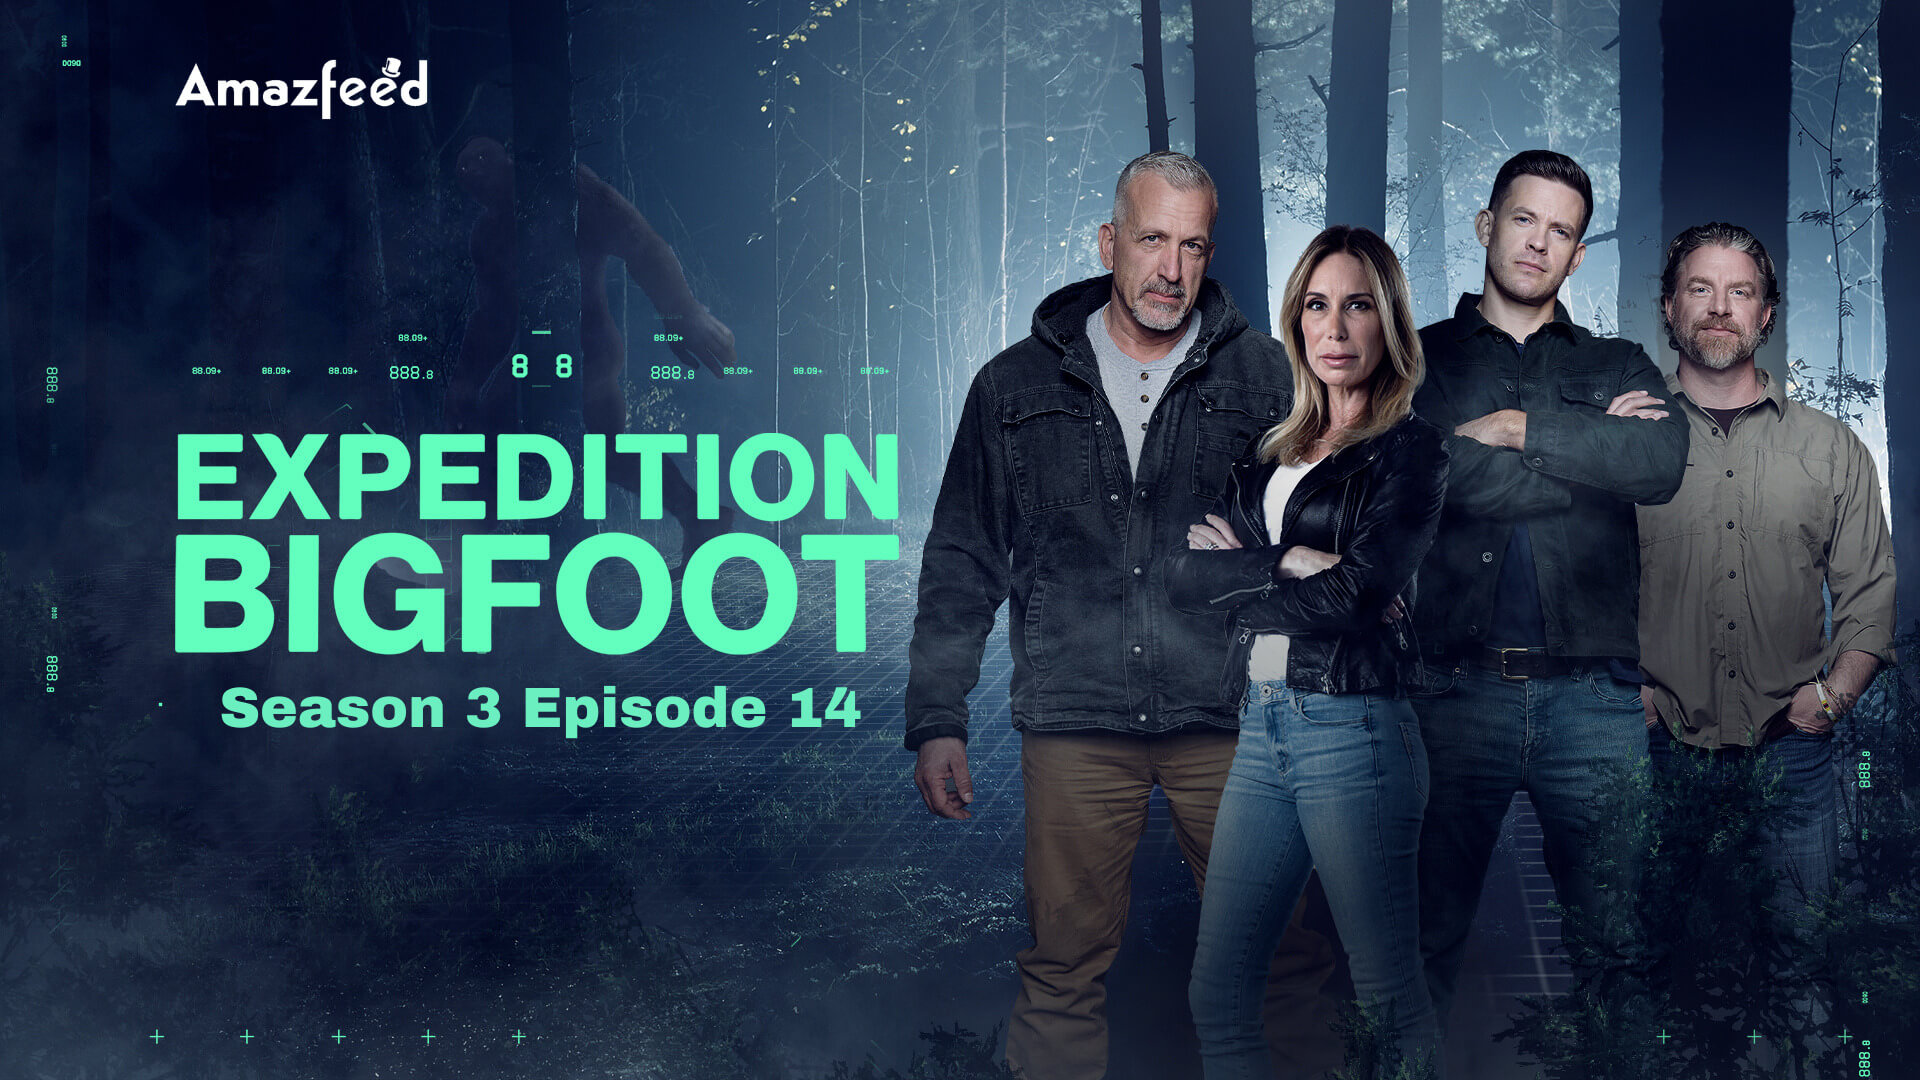 Expedition Bigfoot Season 3 Episode 14 Release date